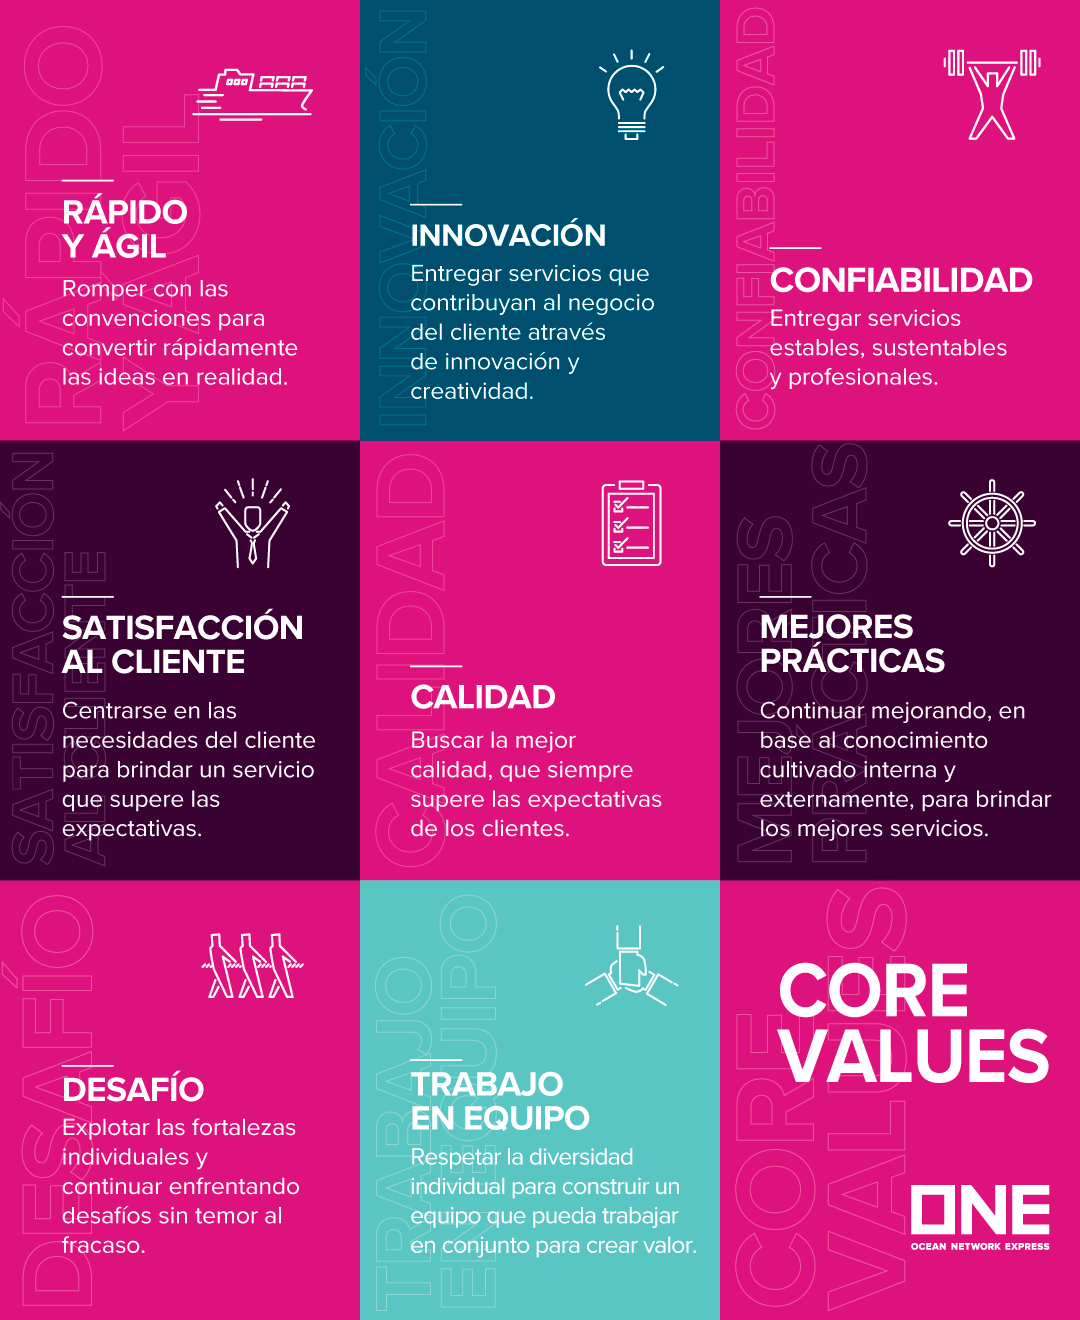 CoreValues_Website_Spanish